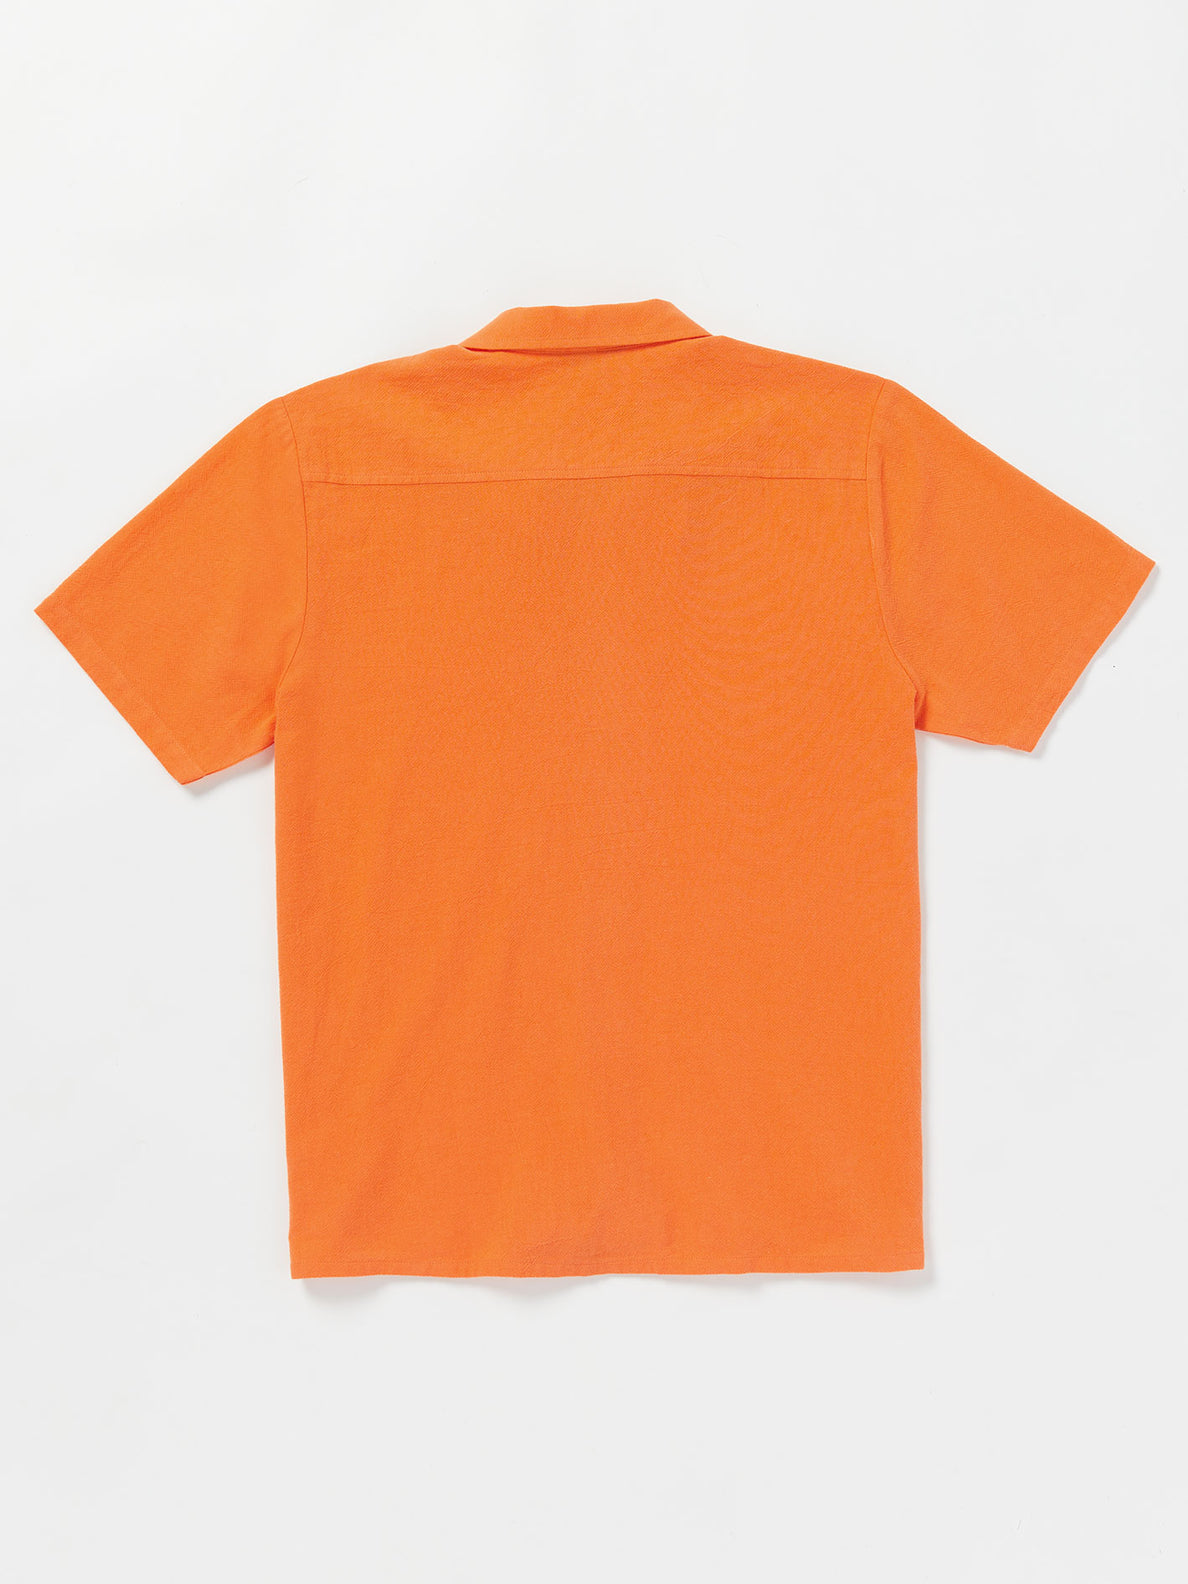 Stone Break Water Short Sleeve Shirt - Summer Orange